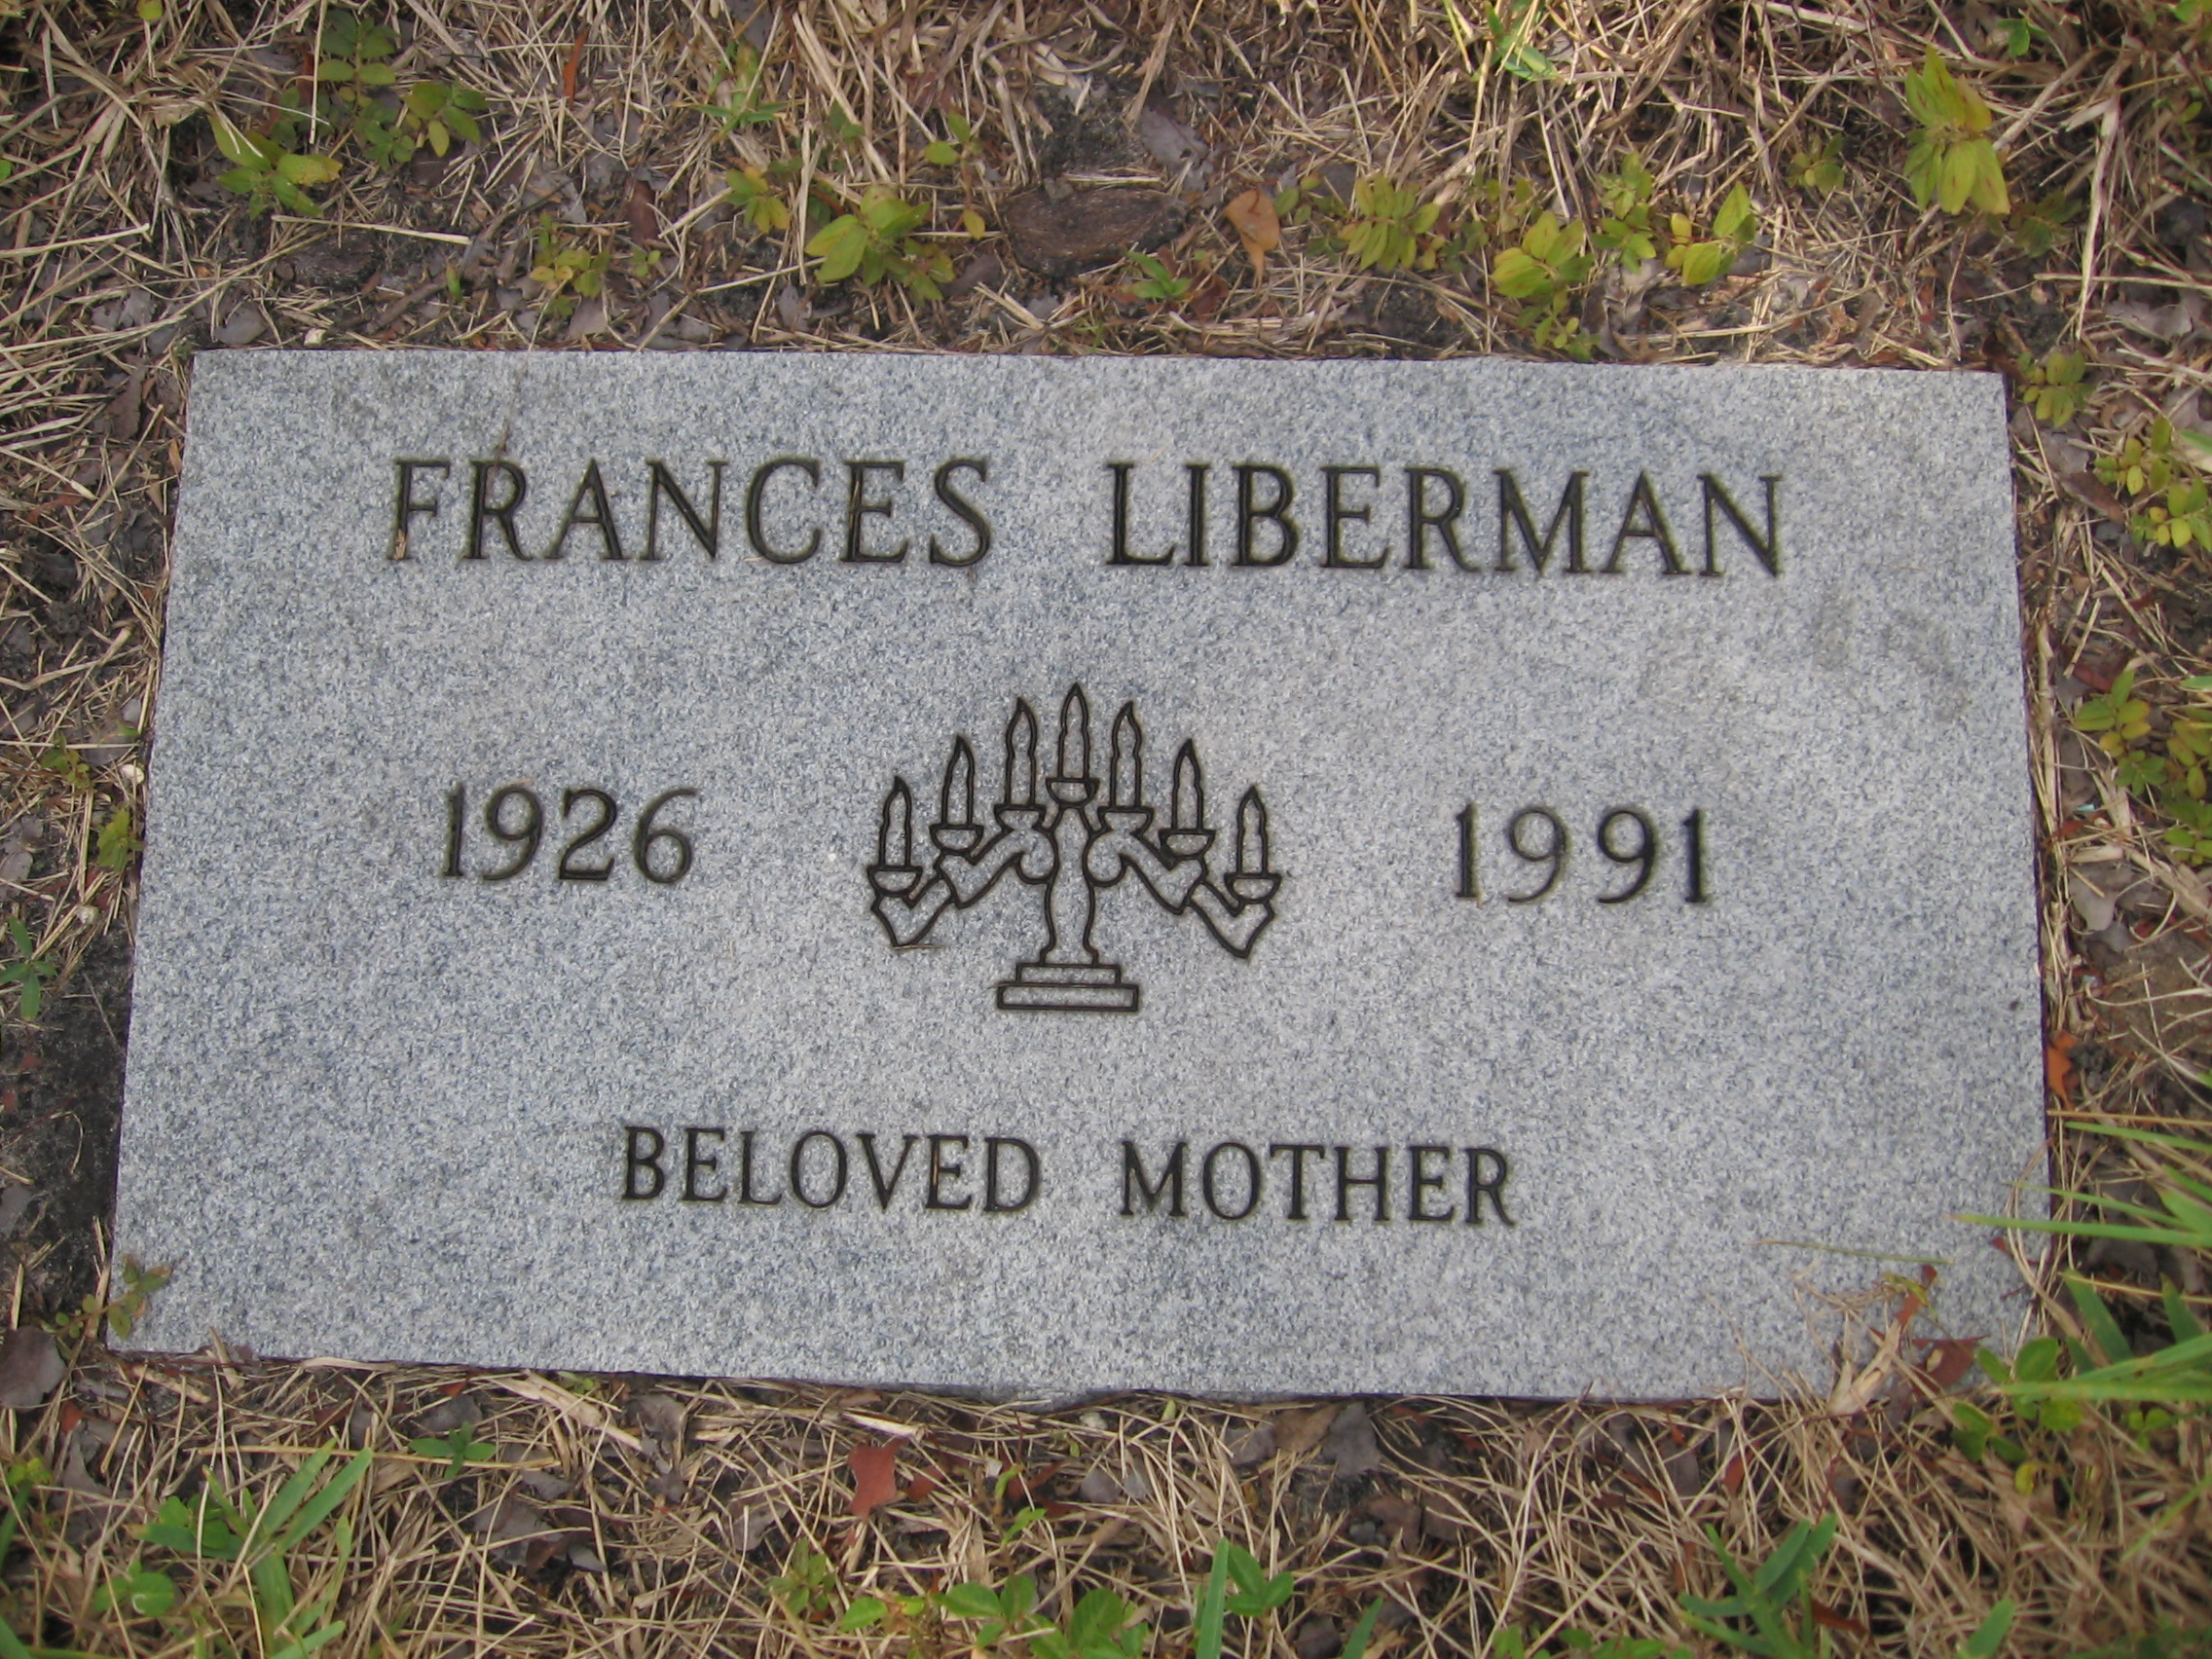 Frances Liberman